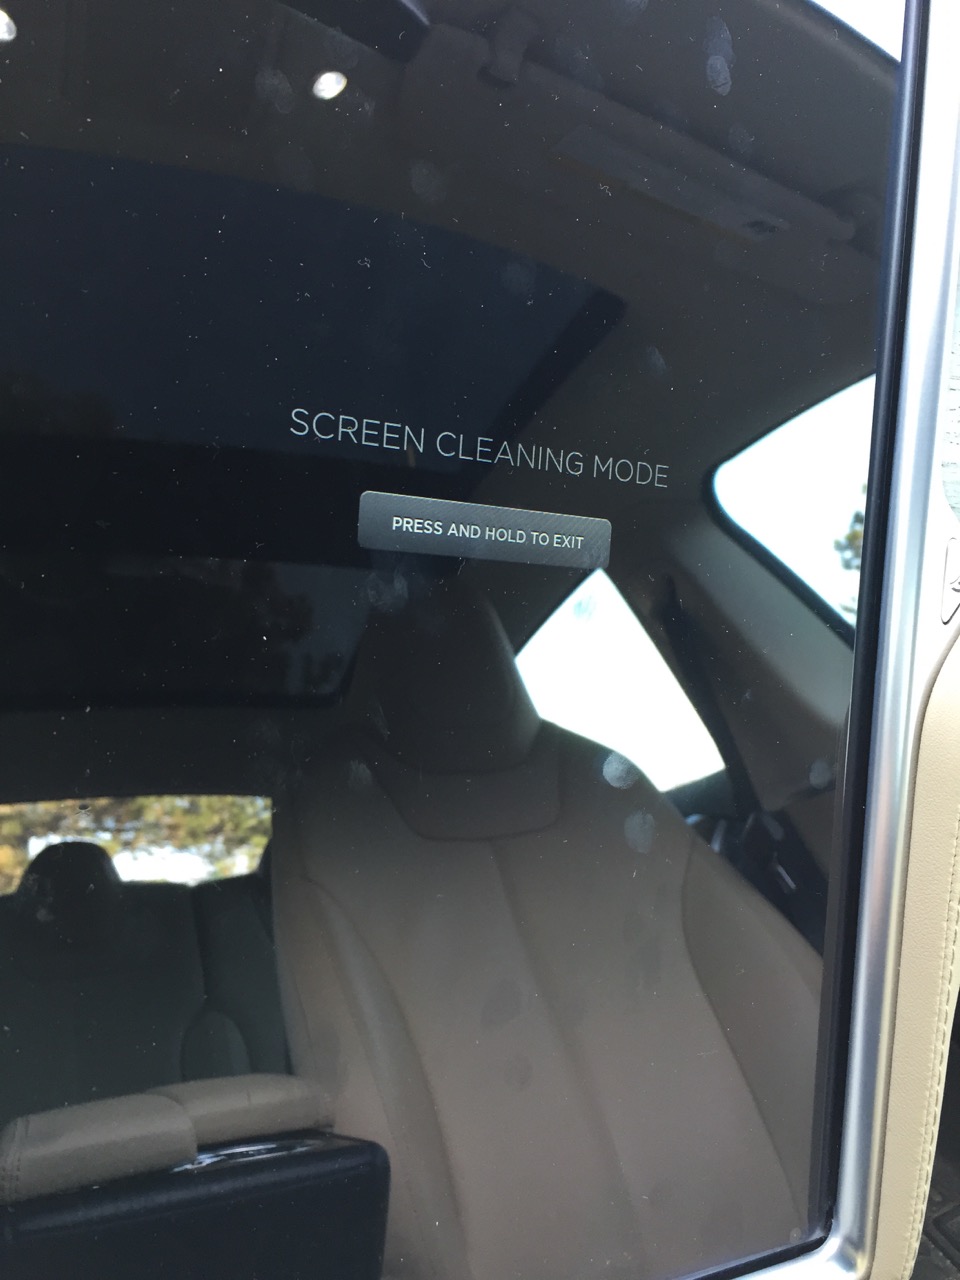 Tesla clean screen mode #tesla #modely #cleanyourscreen